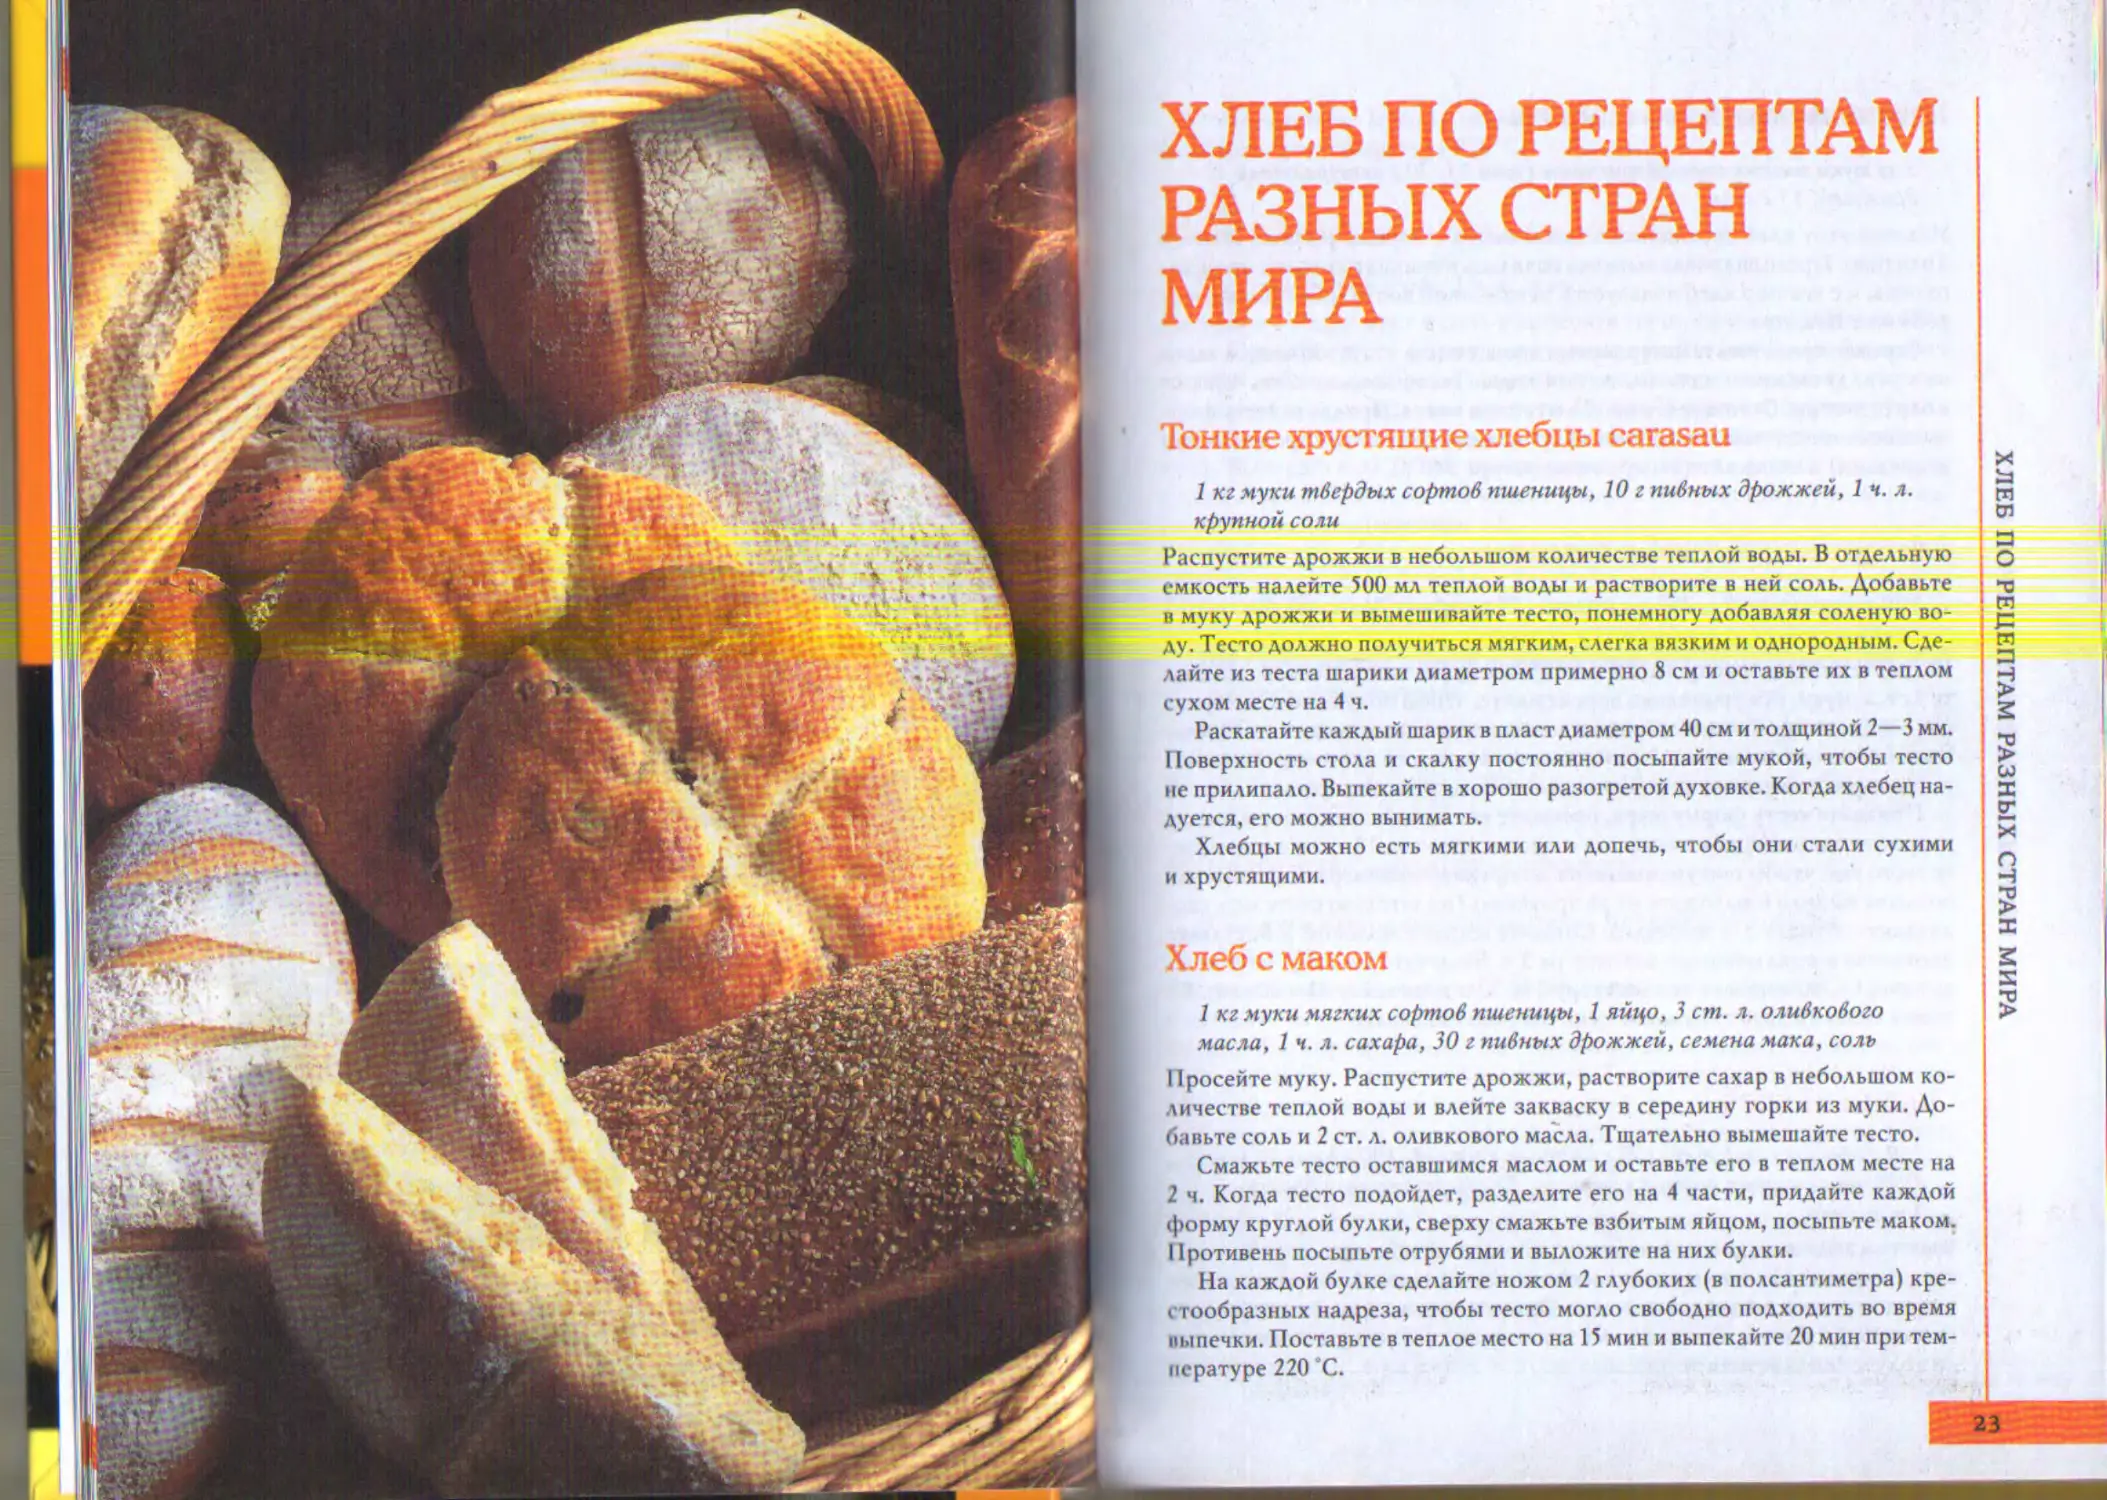 Рецепт хлеба на 900 грамм